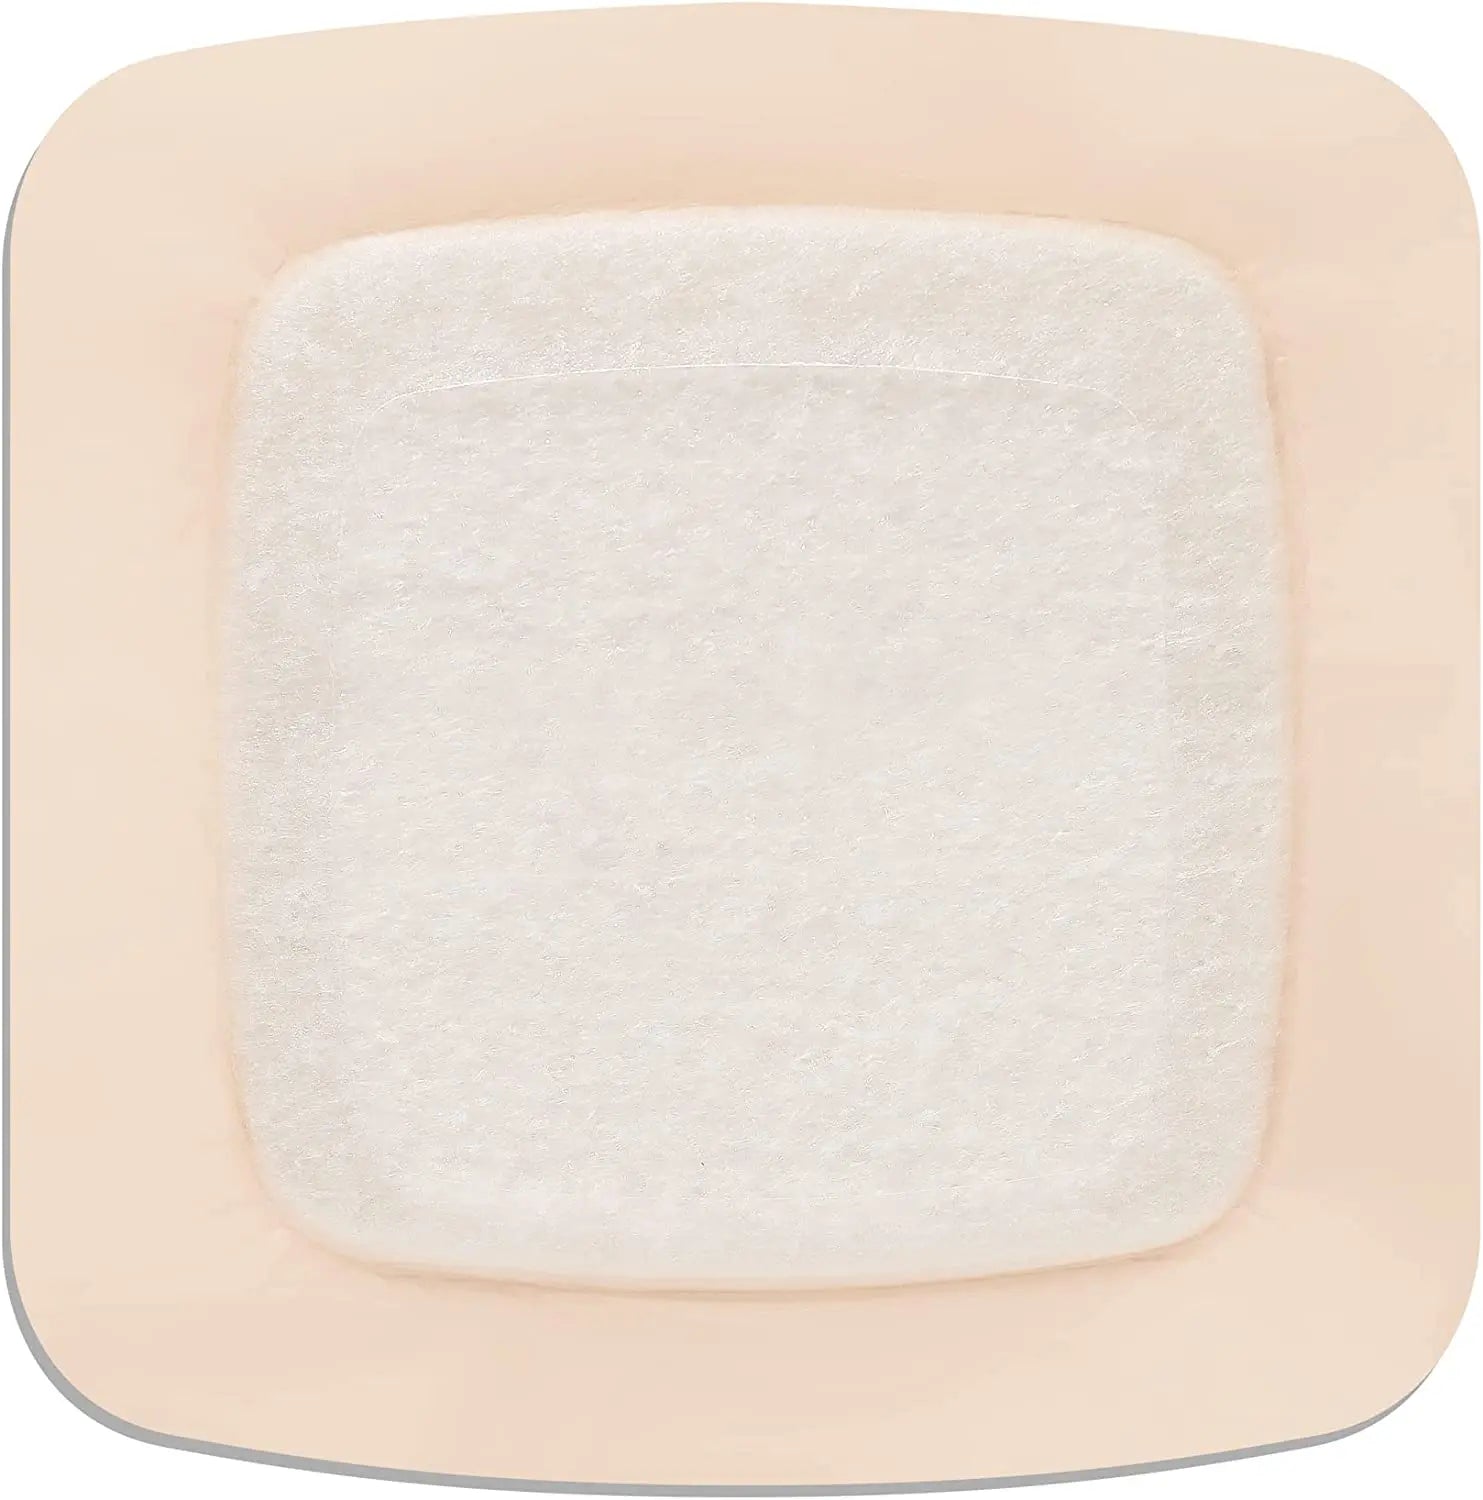 Aquacel Foam Adhesive Dressing, Sterile 17.5cm X 17.5cm - Box Of 10